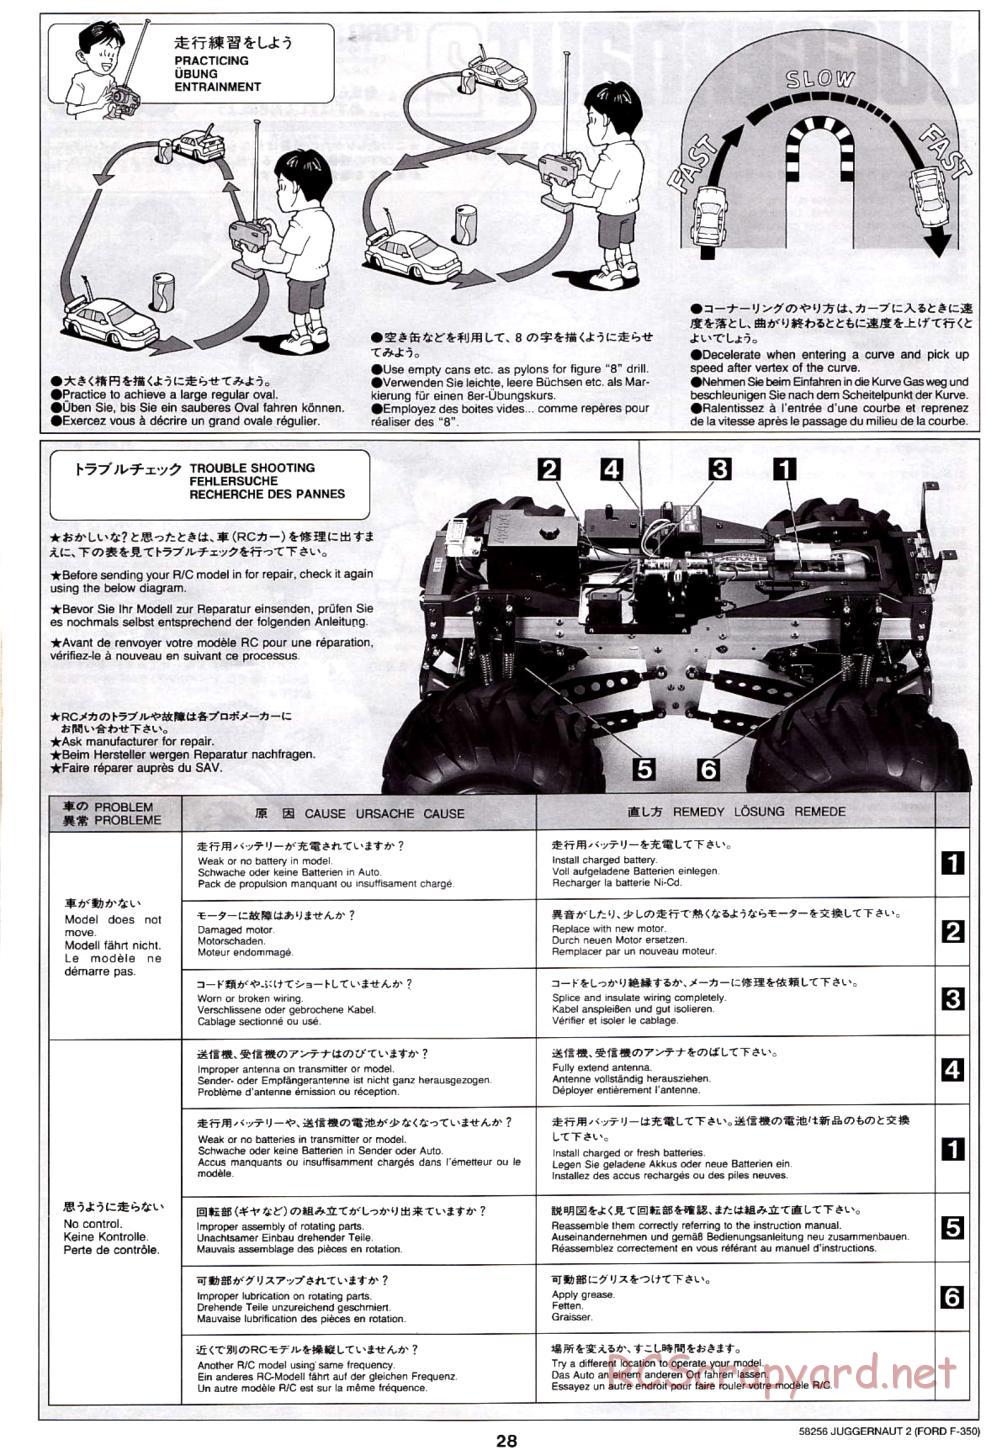 Tamiya - Juggernaut 2 Chassis - Manual - Page 28